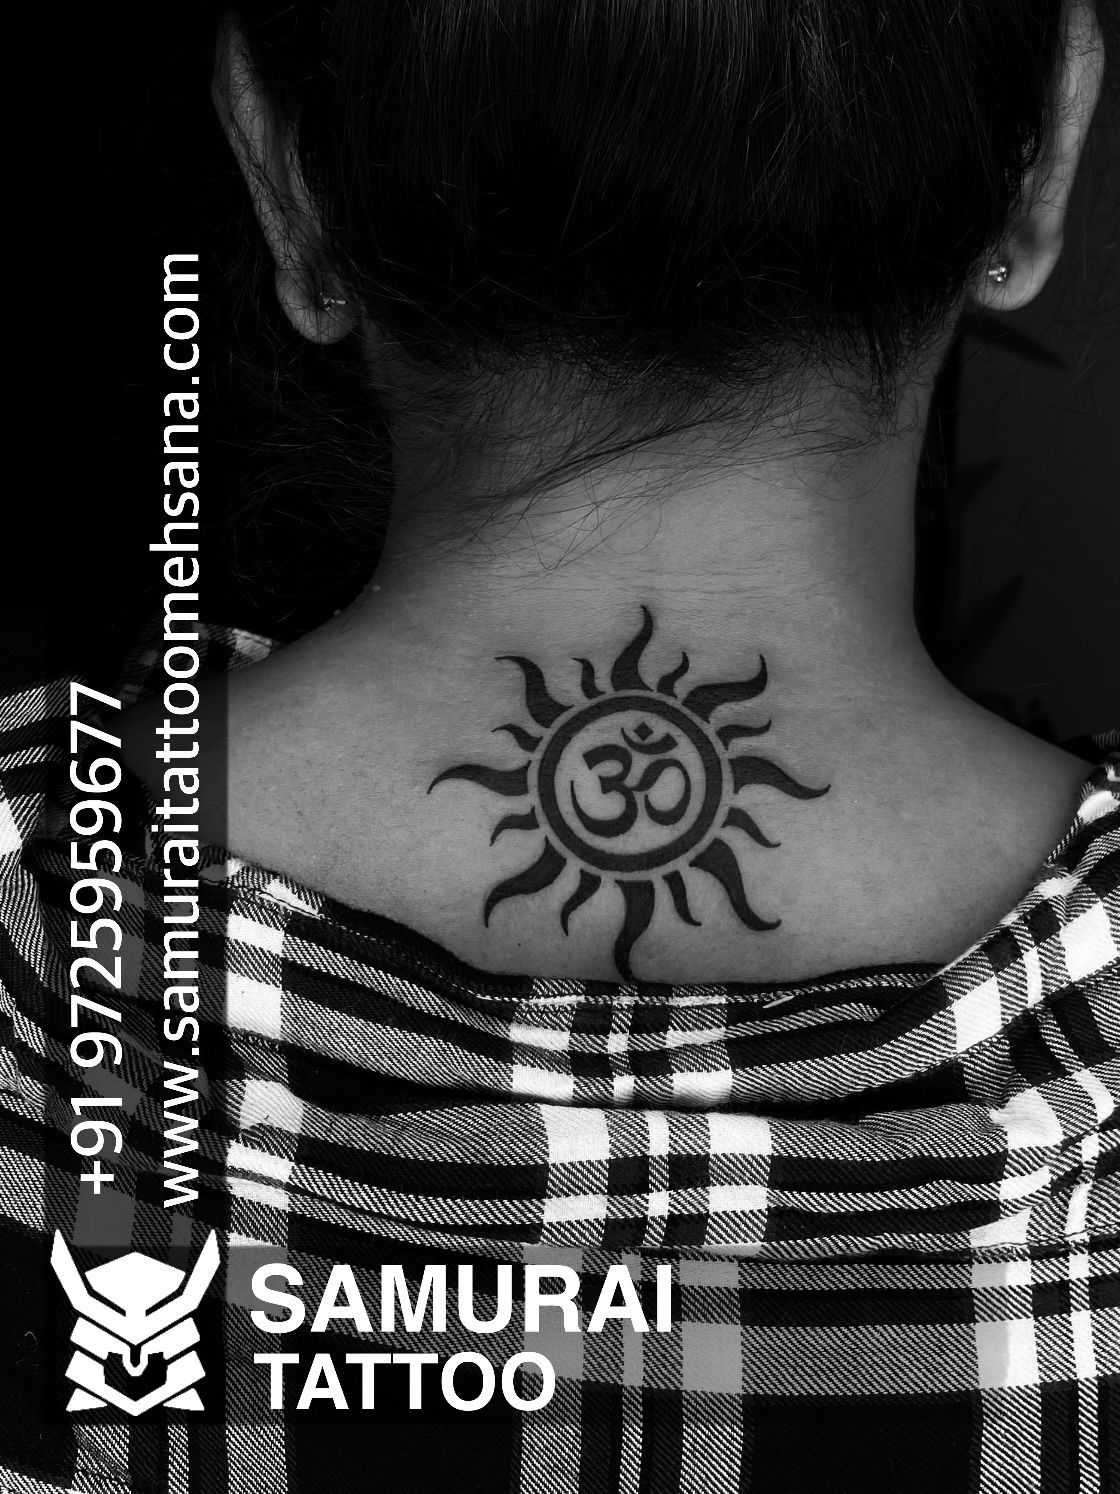 Share more than 135 suryavanshi tattoo latest